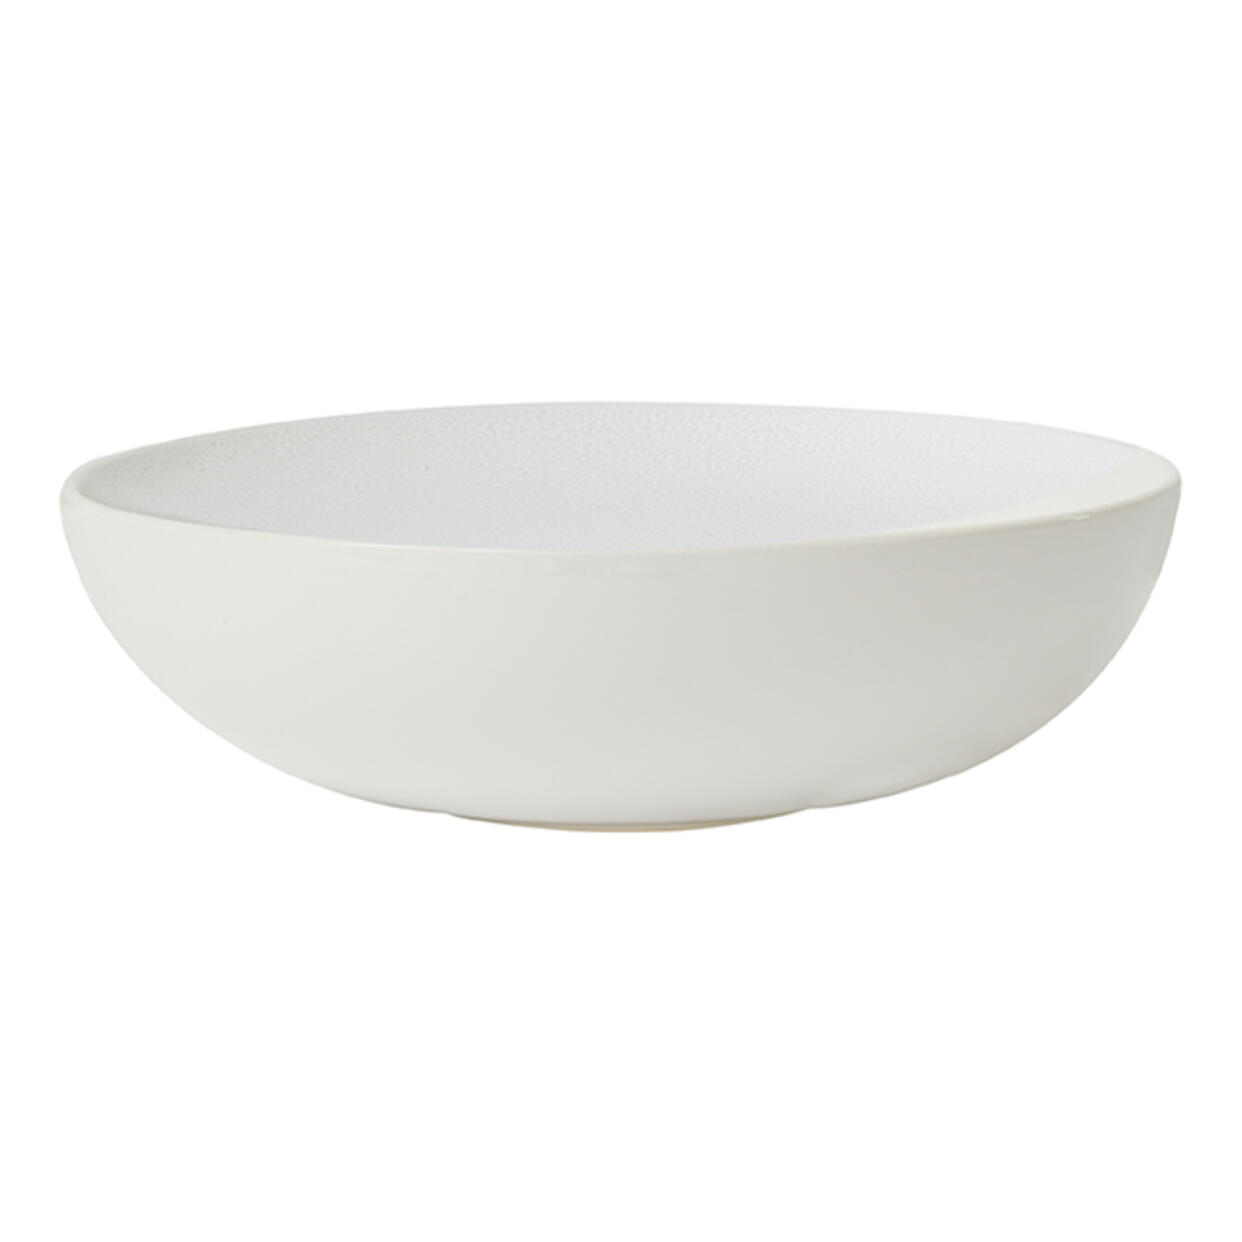 serve bowl tourron neige ceramic manufacturer